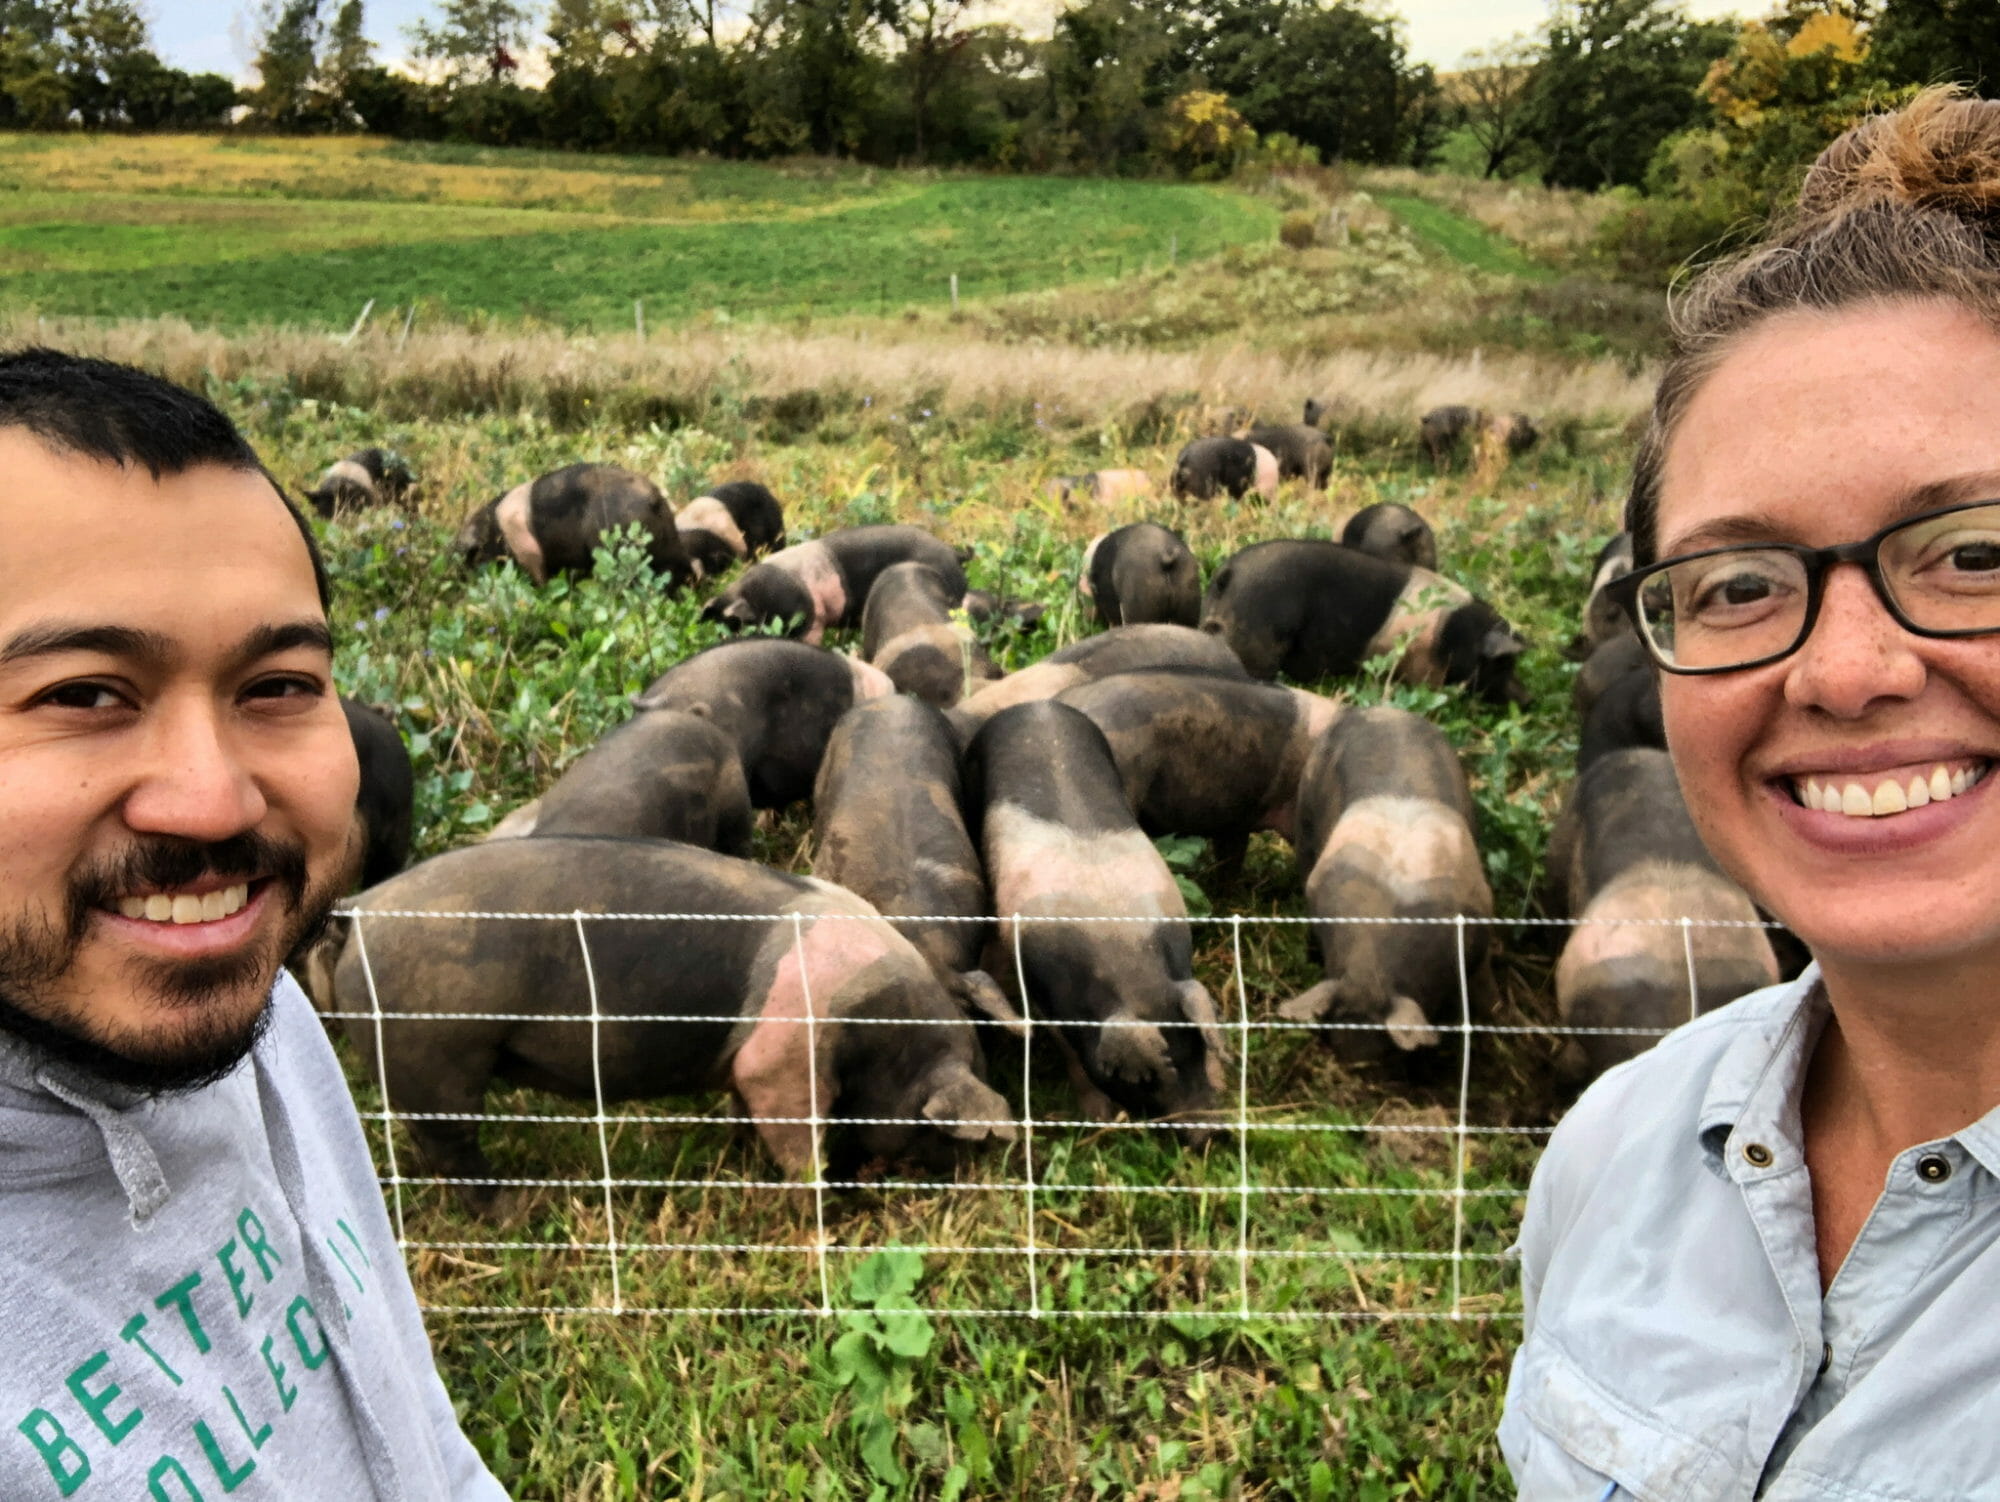 Nick Nguyen and Dayna Burtness with their pigs